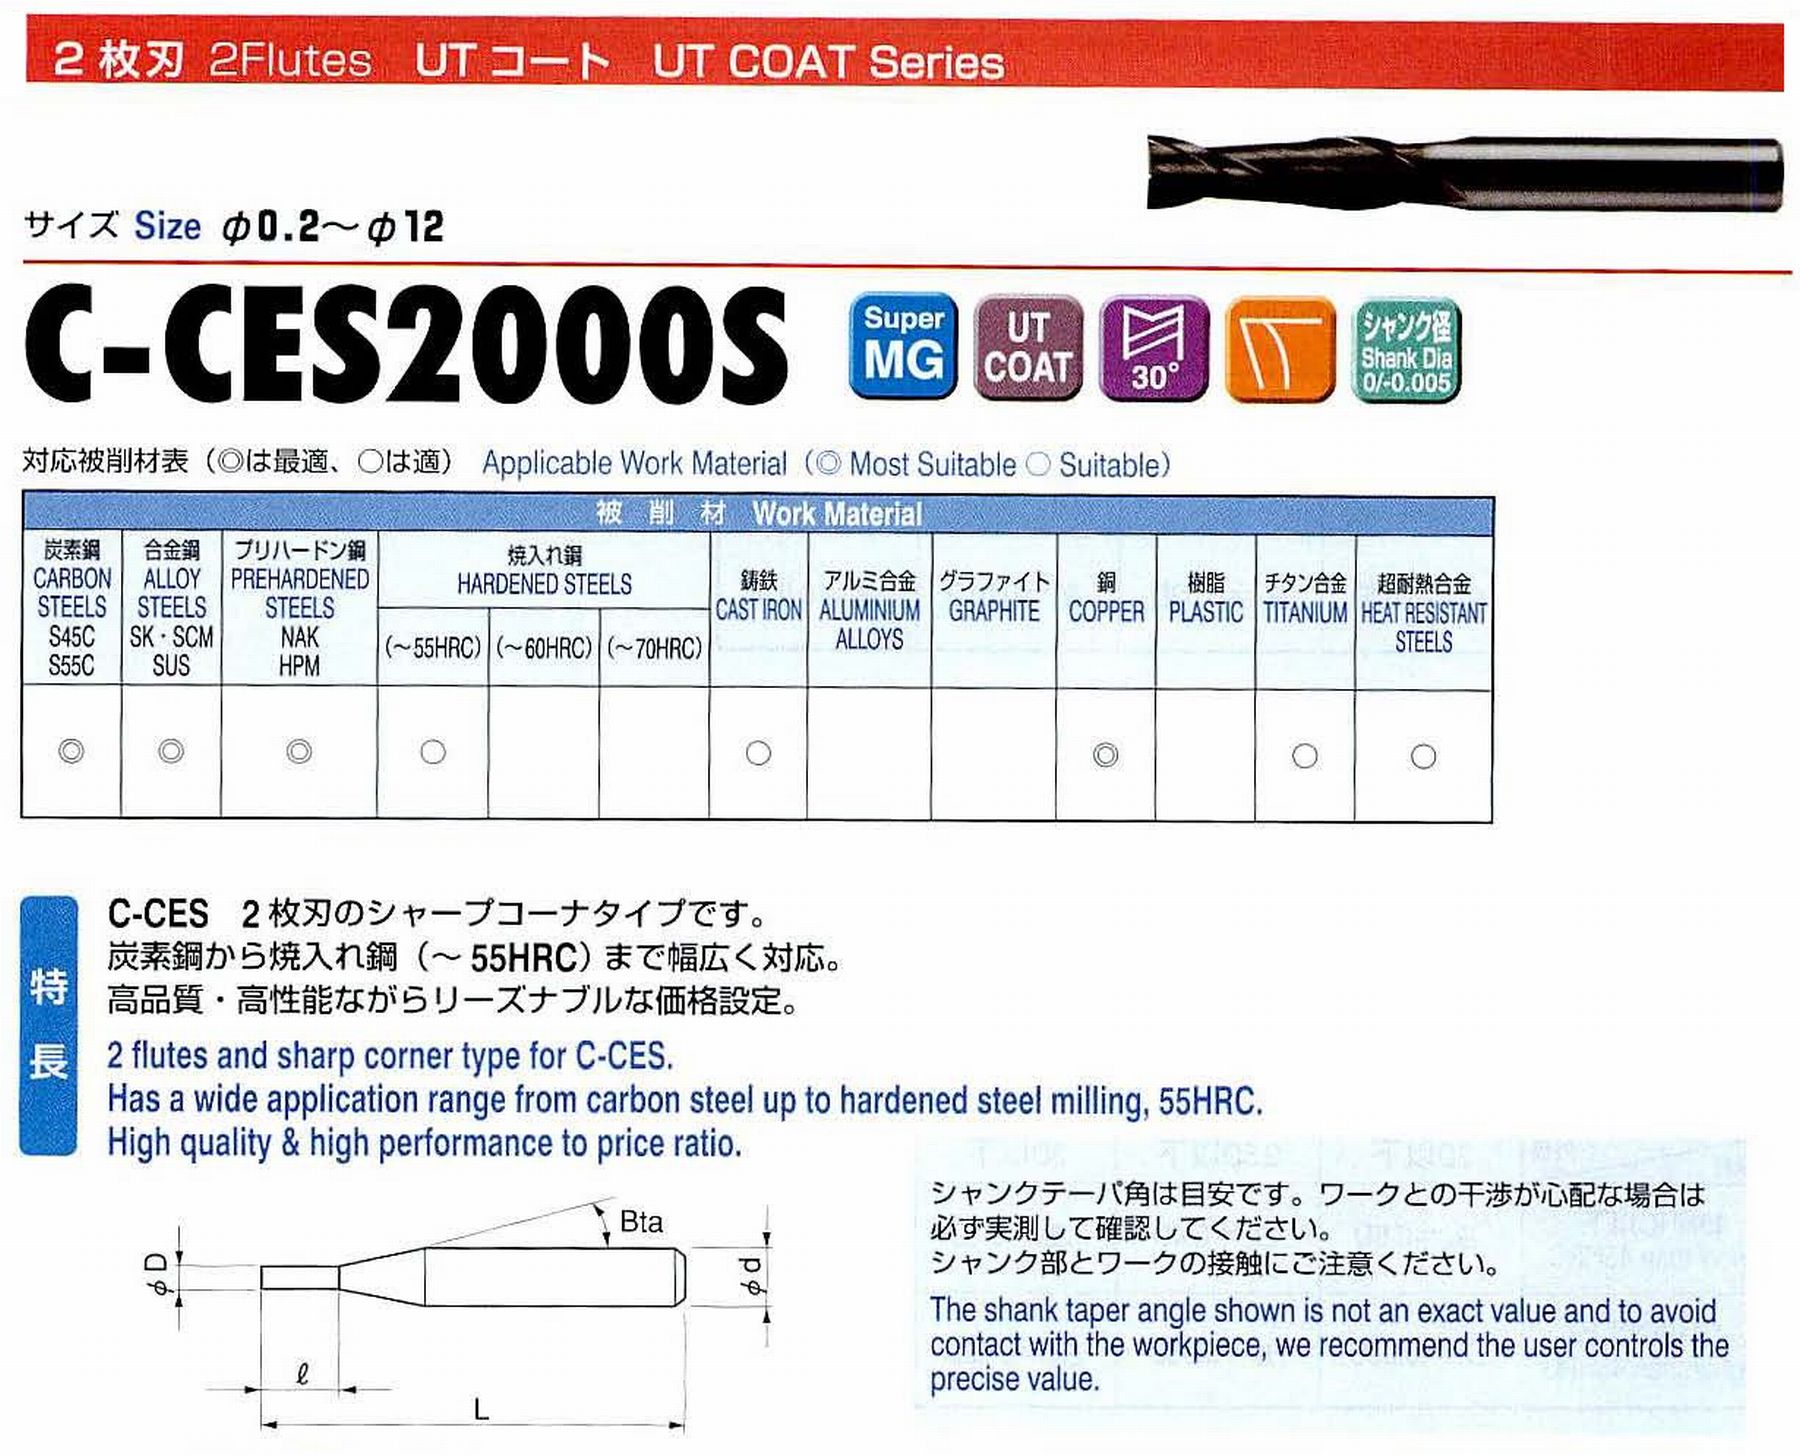 UNION 2枚刃 C-CES2008-0120S 外径0.8 刃長1.2 シャンクテーバ角16度 全長45 シャンク径4